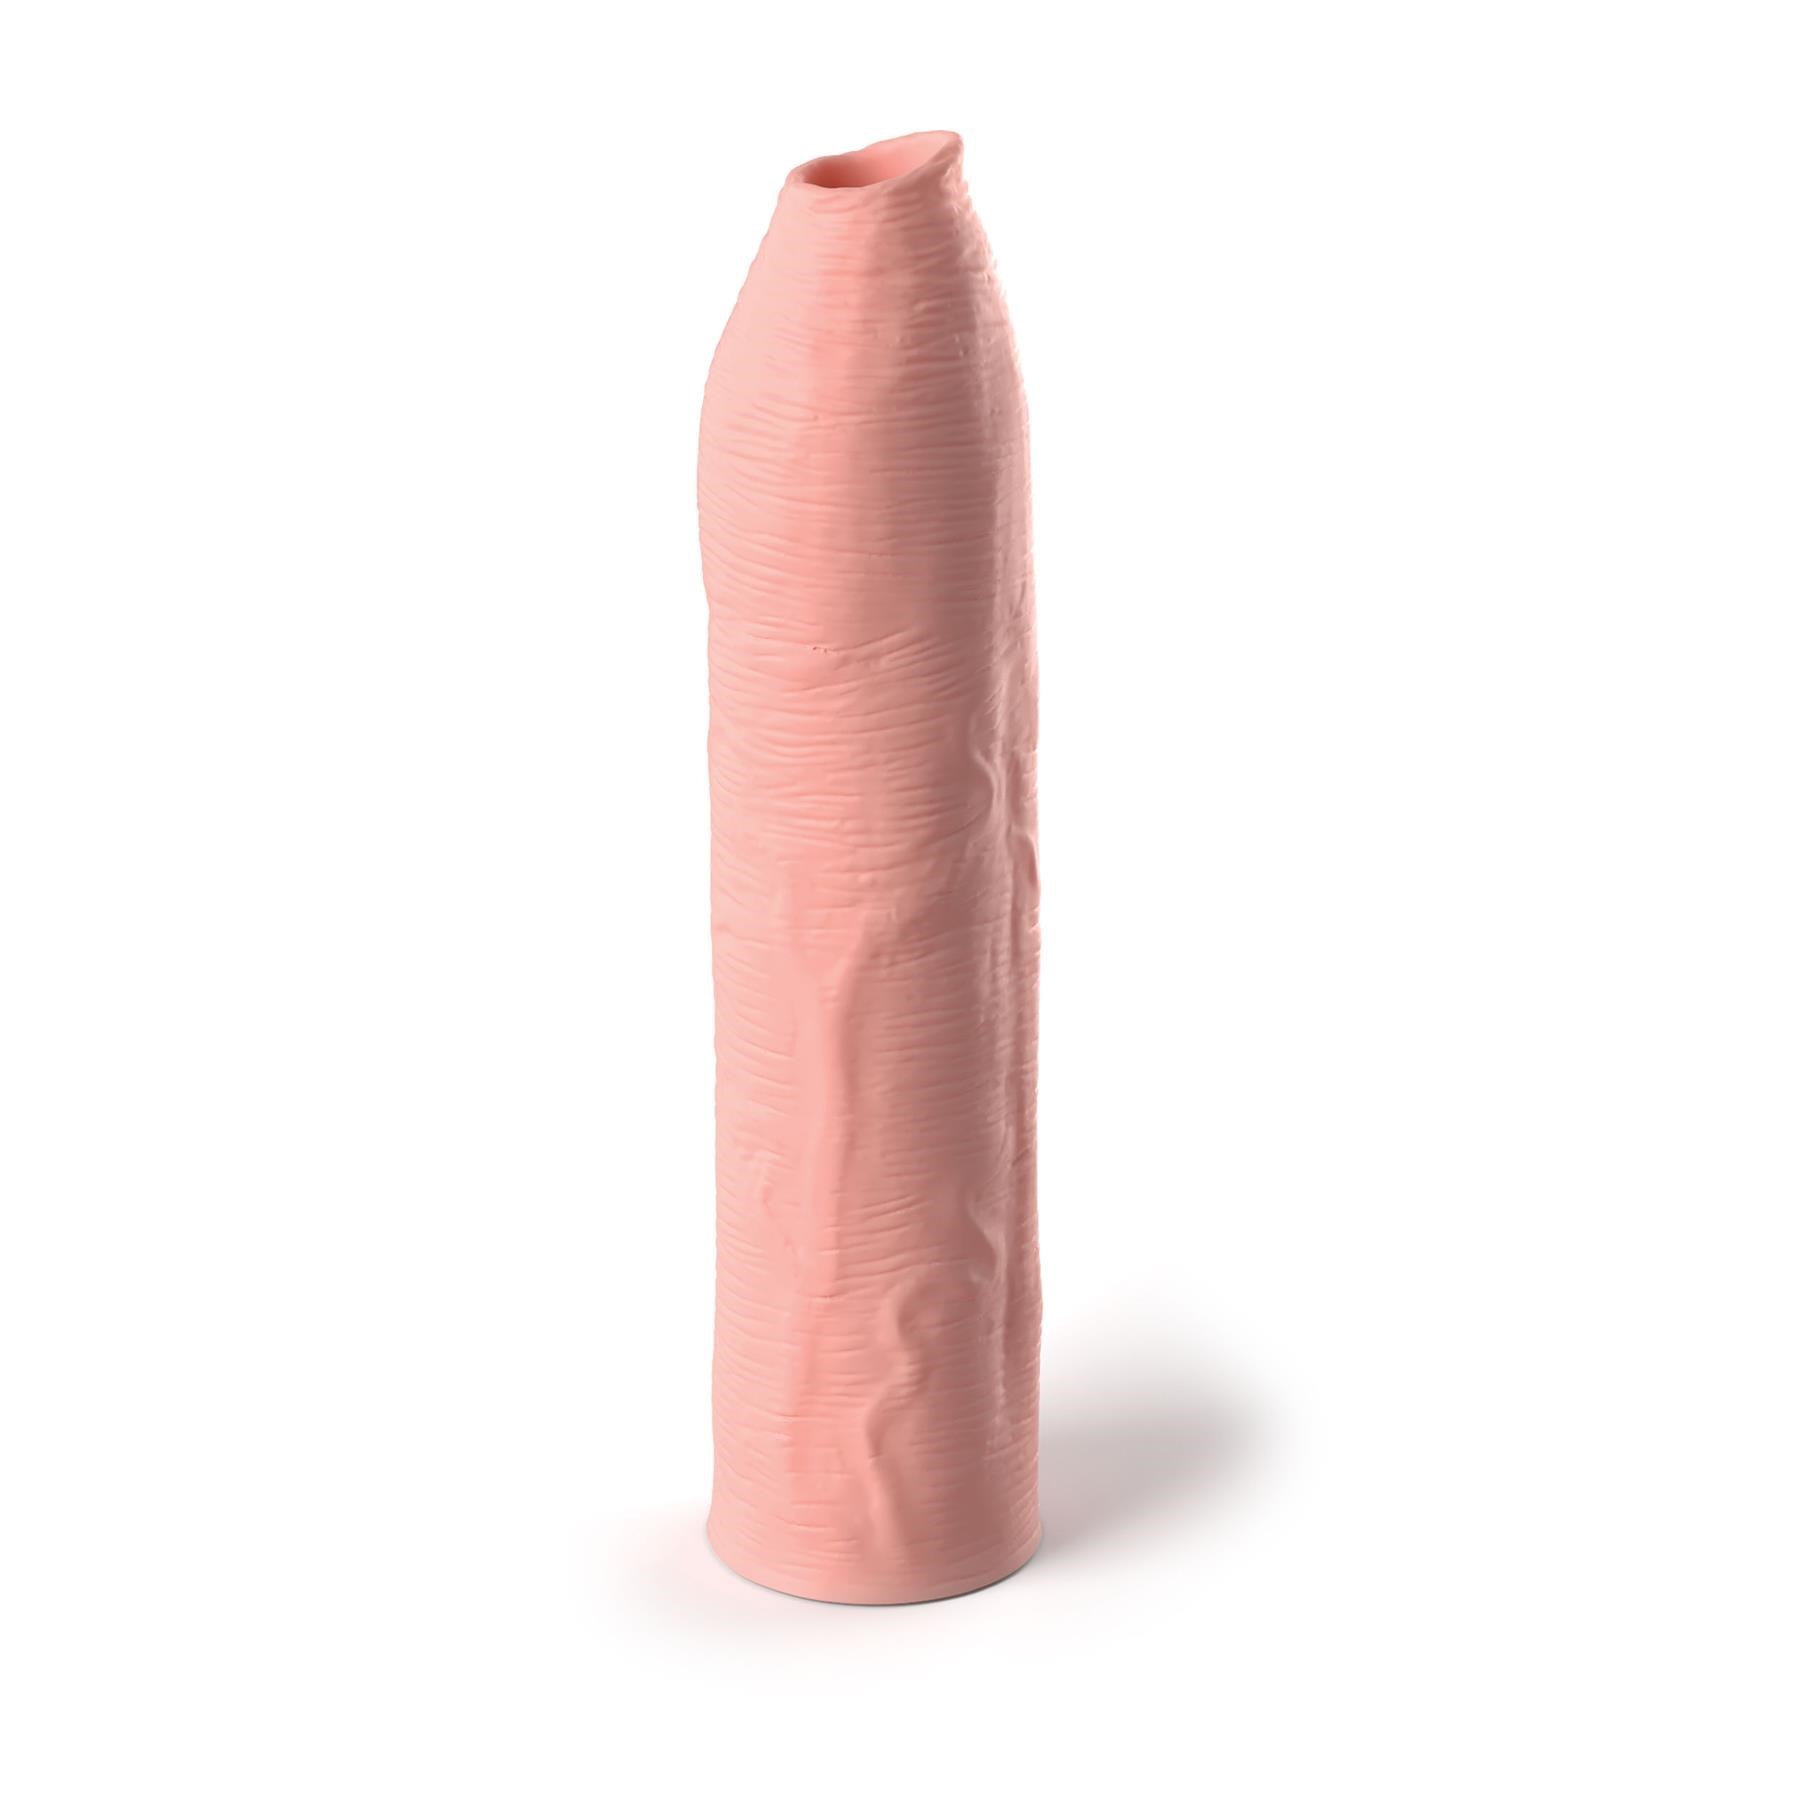 Fantasy X-Tensions Elite Uncut Silicone Penis Enhancer - Product Shot - White